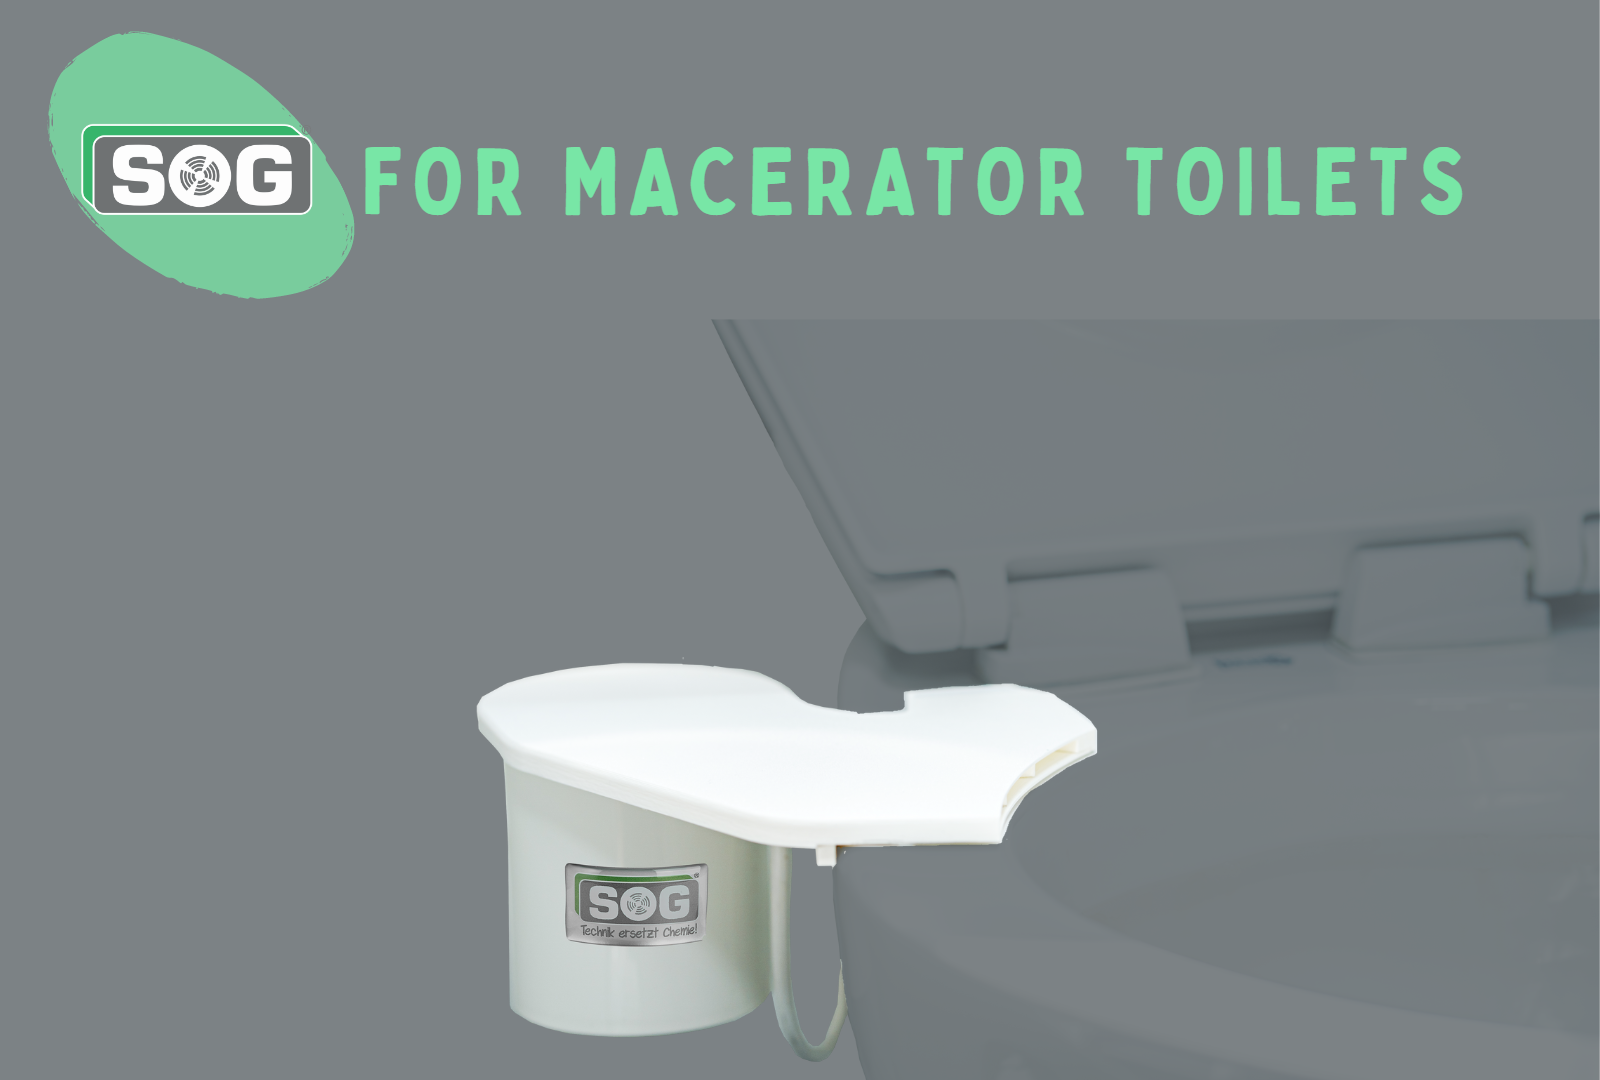 Macerator toilets